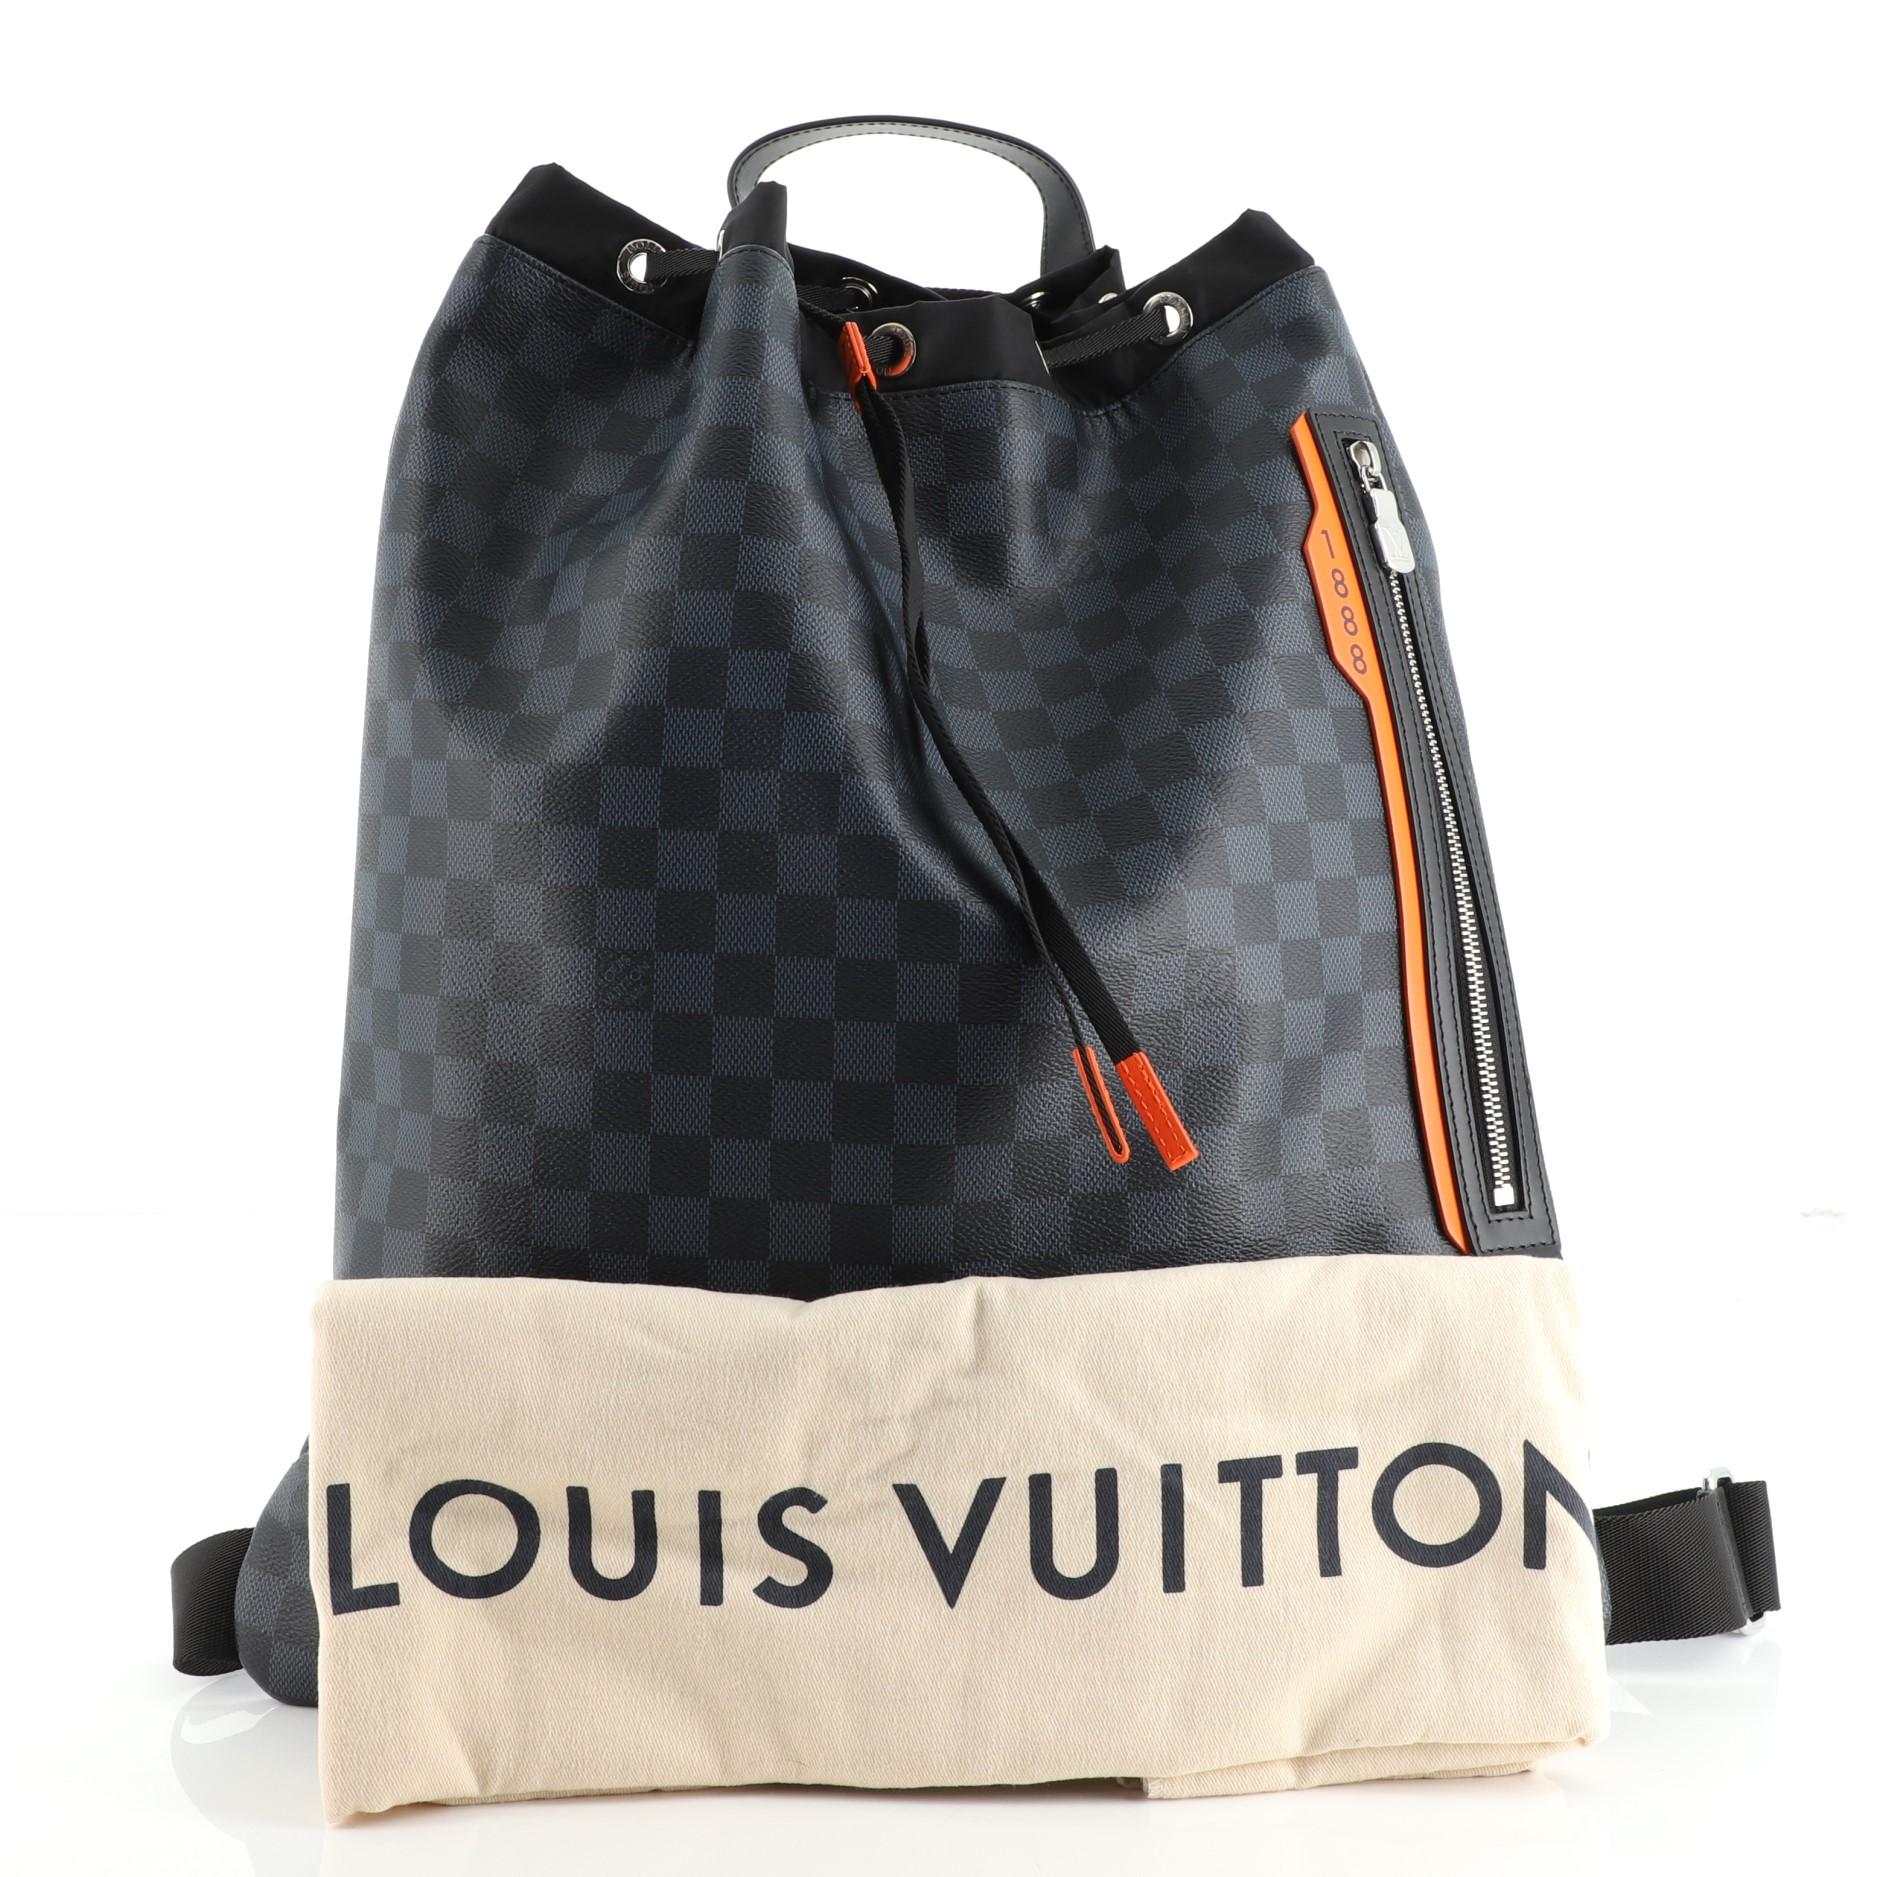 Louis Vuitton Damier Cobalt Race Discovery Messenger PM, Luxury